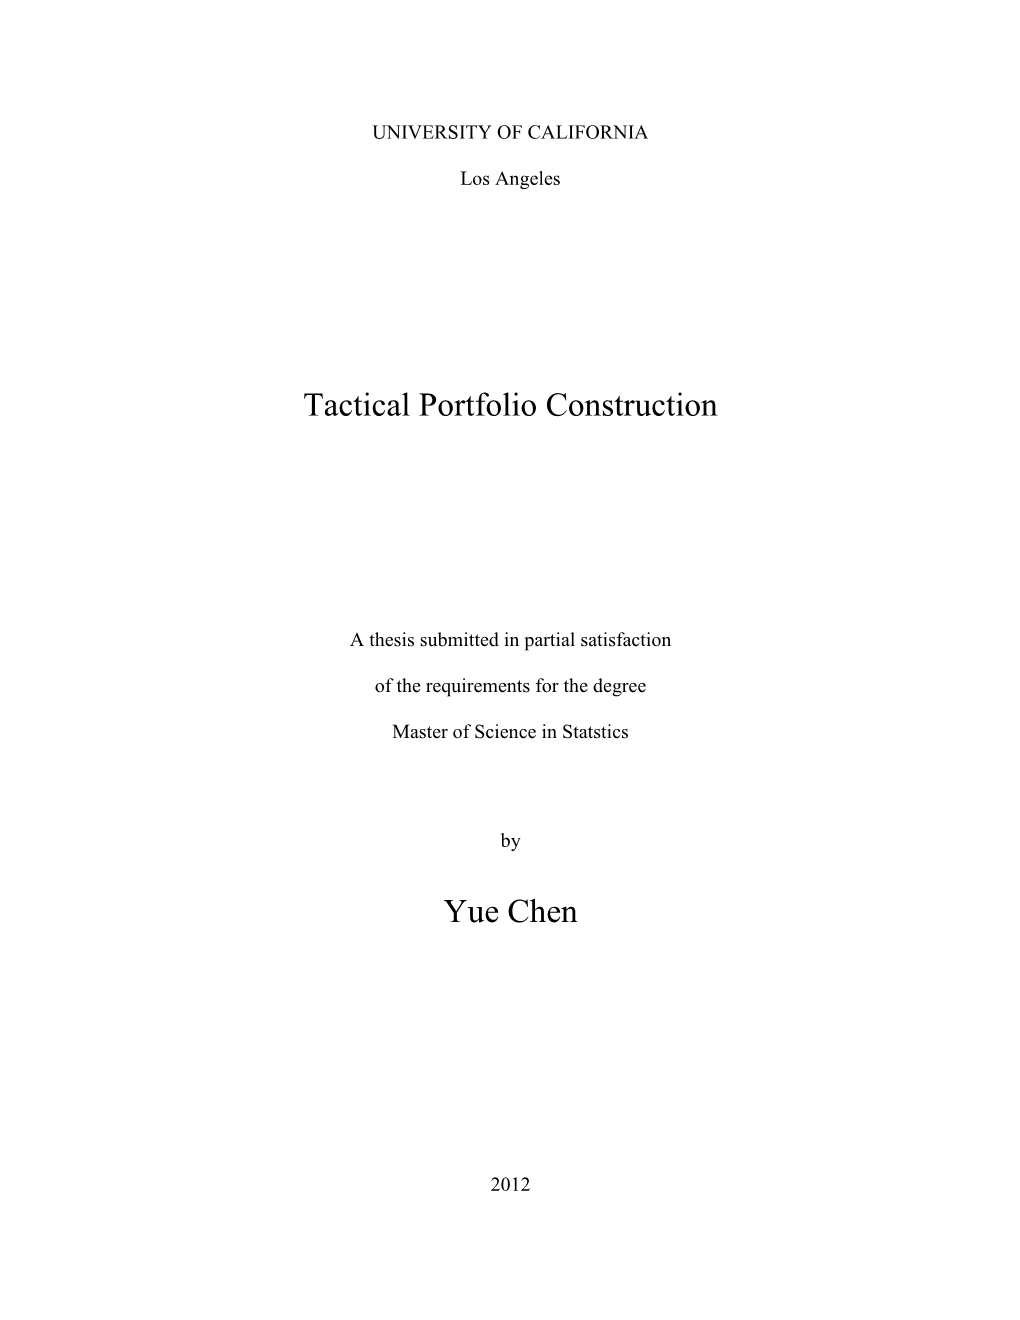 Tactical Portfolio Construction Yue Chen